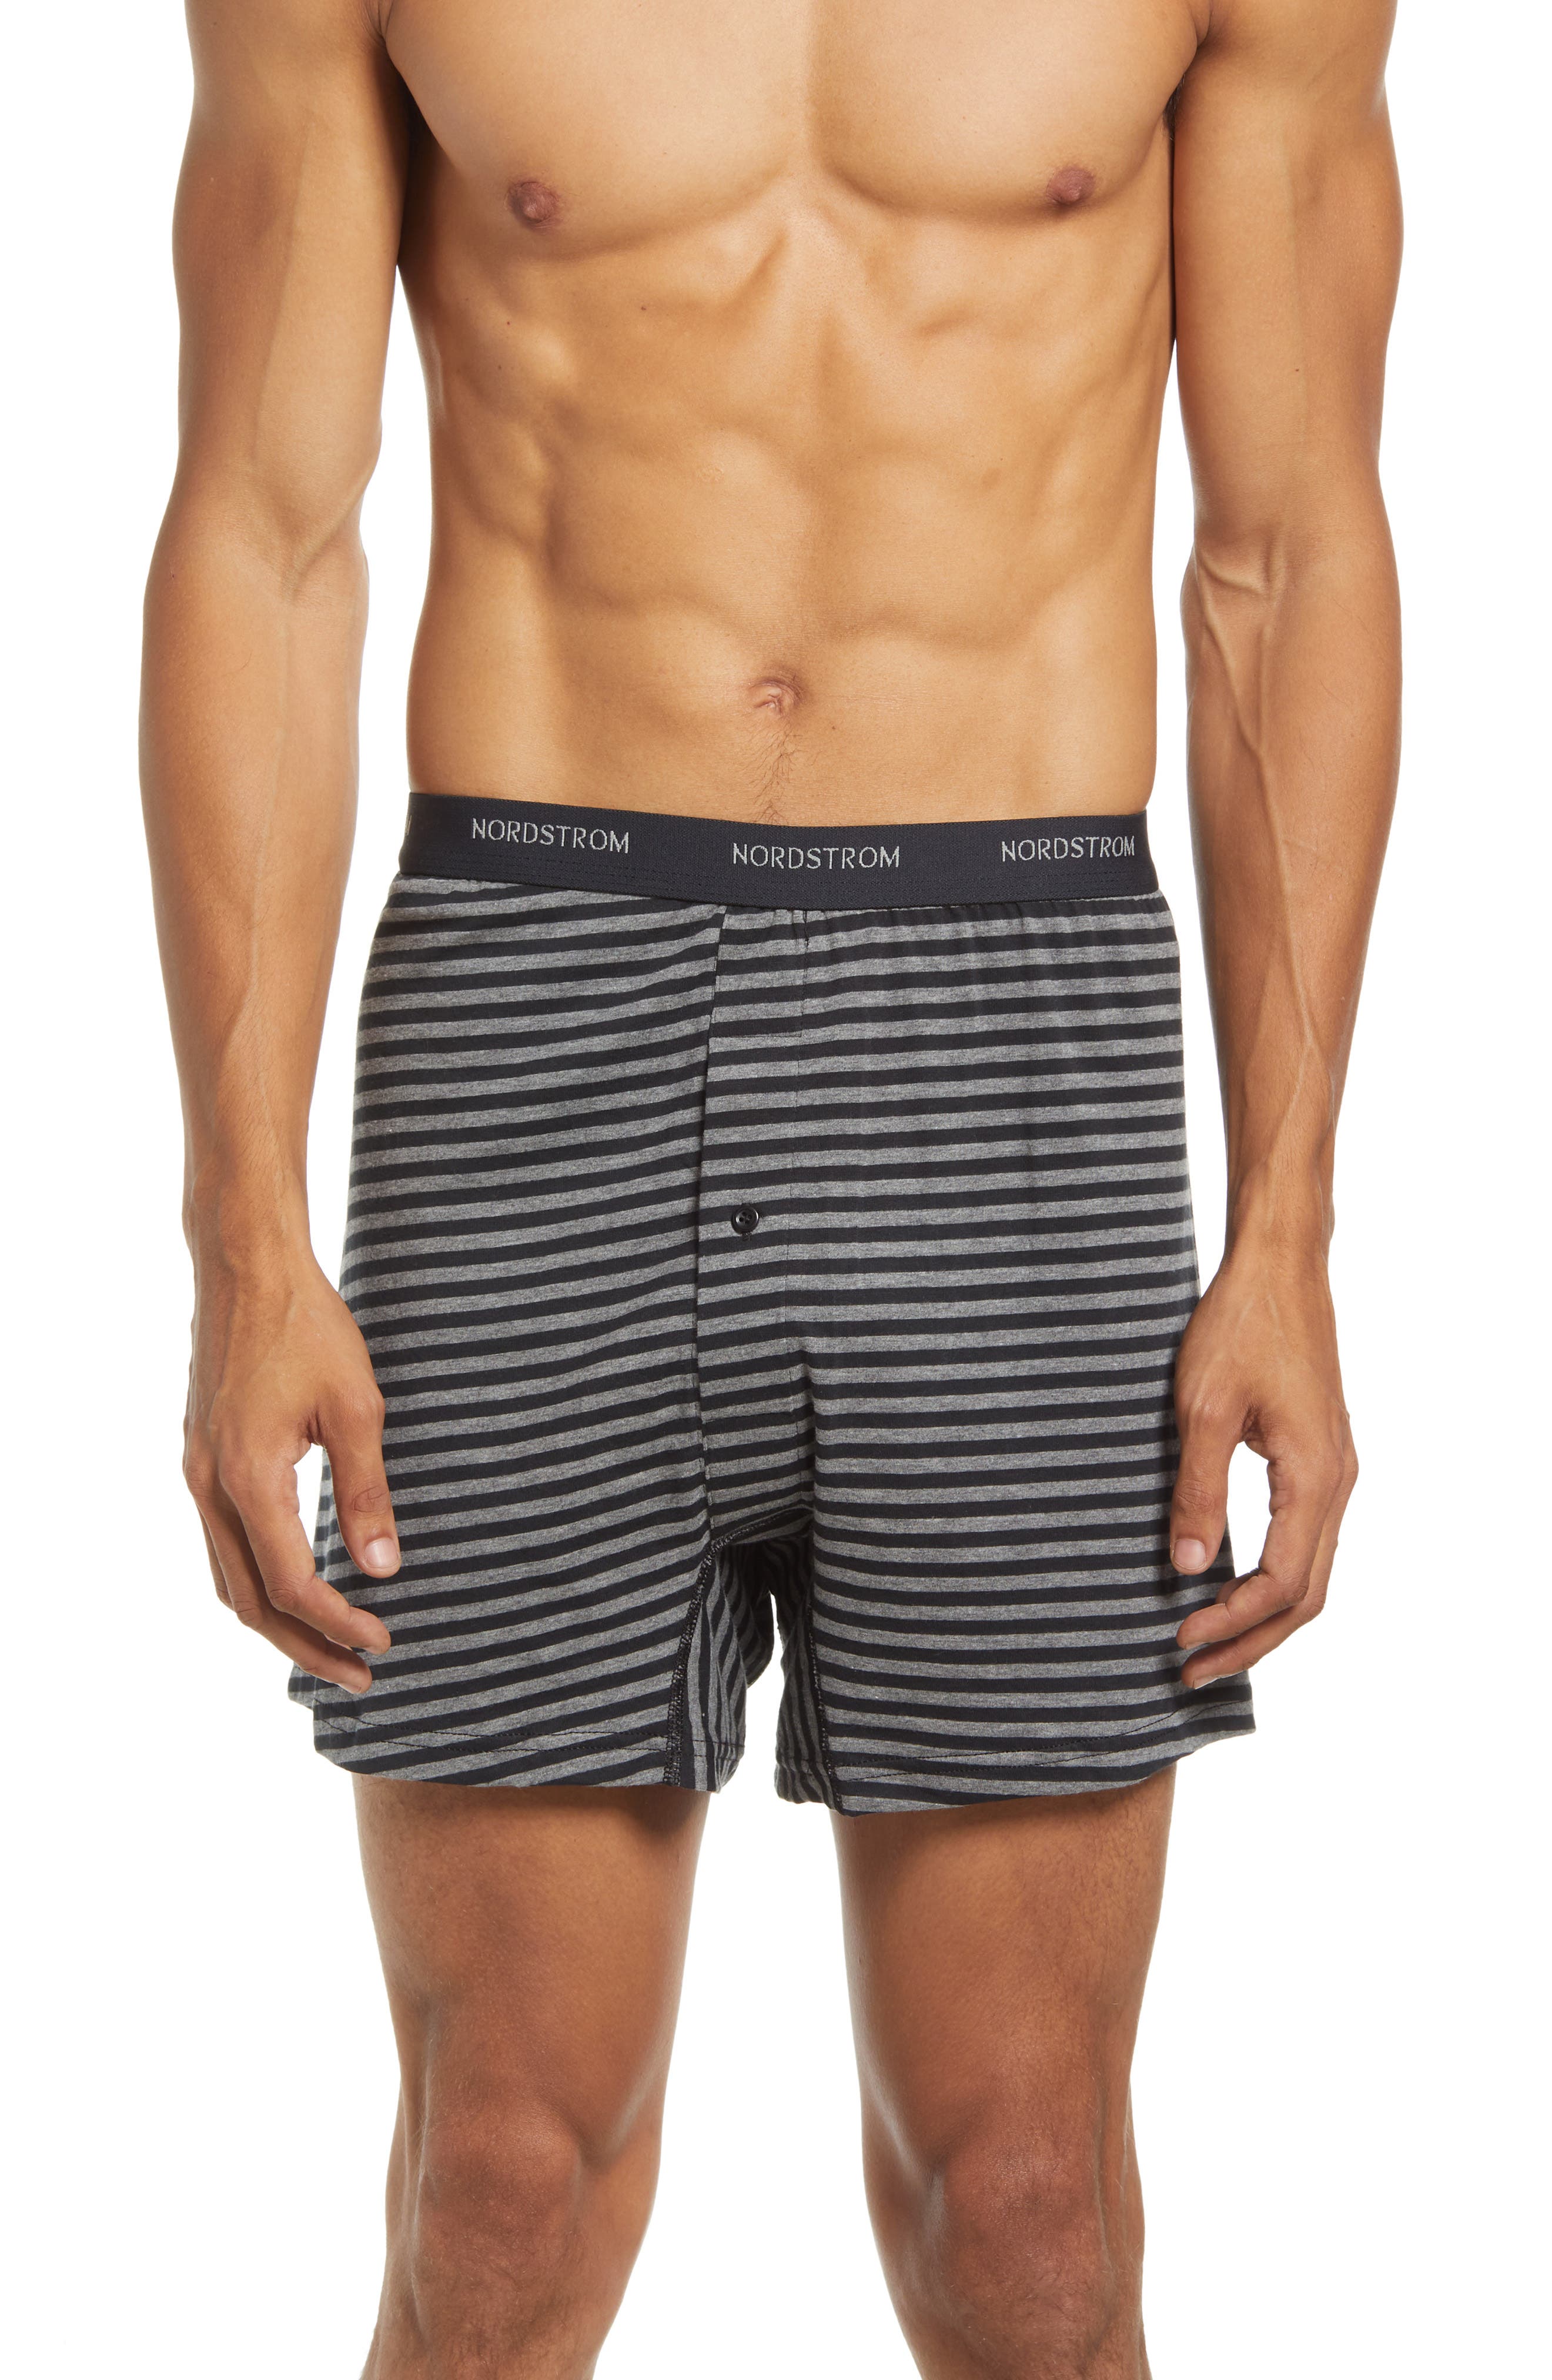 Plus Size Mens Boxer Shorts Underwear Home Underpants Elastic Waist Sleepwear